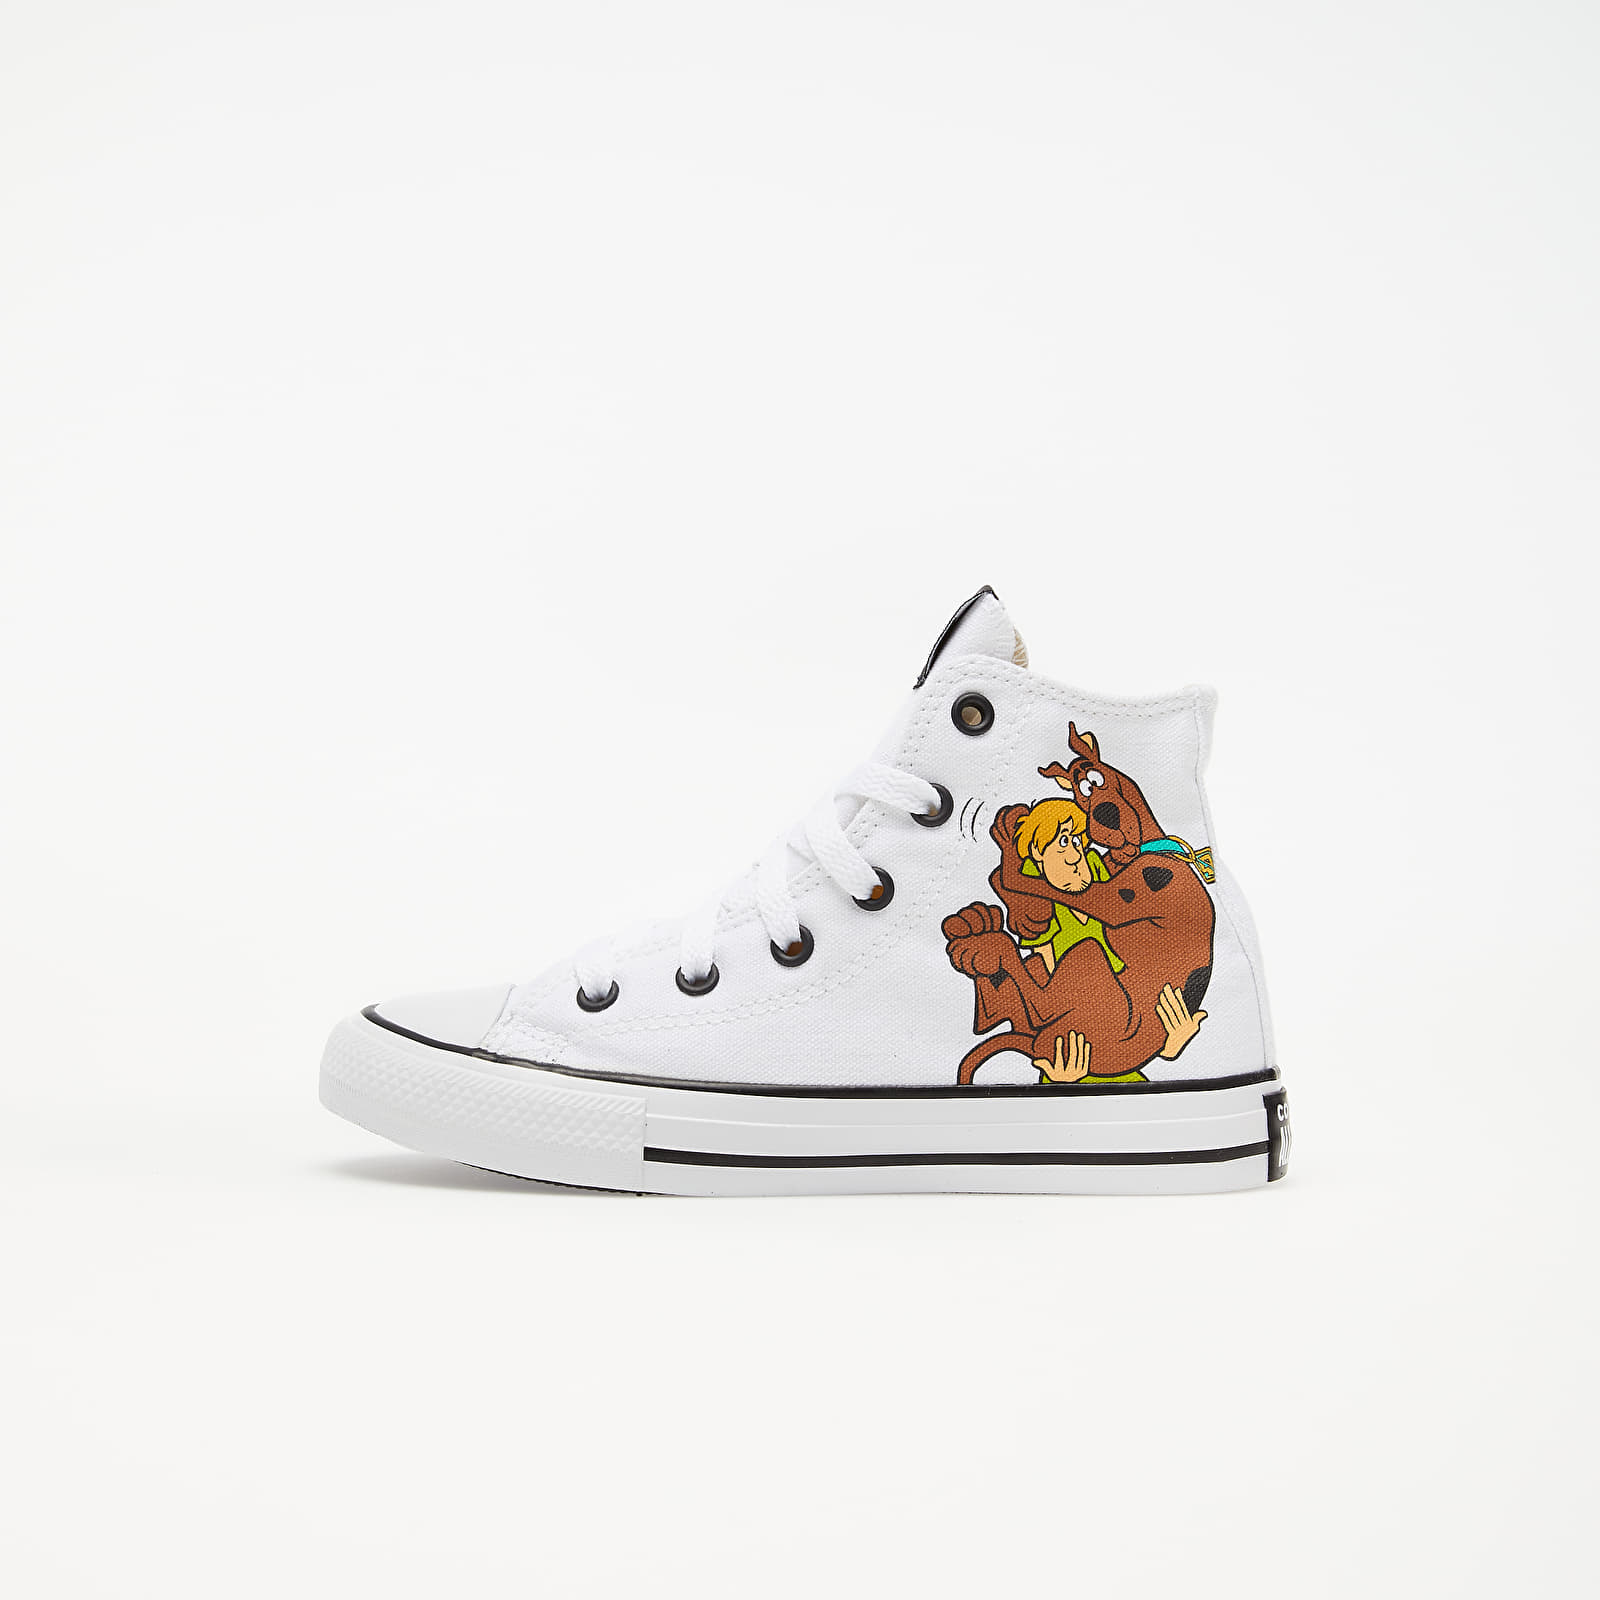 Chaussures et baskets enfants Converse X Scooby-Doo Chuck Taylor All Star Hi White/ Multi/ Black